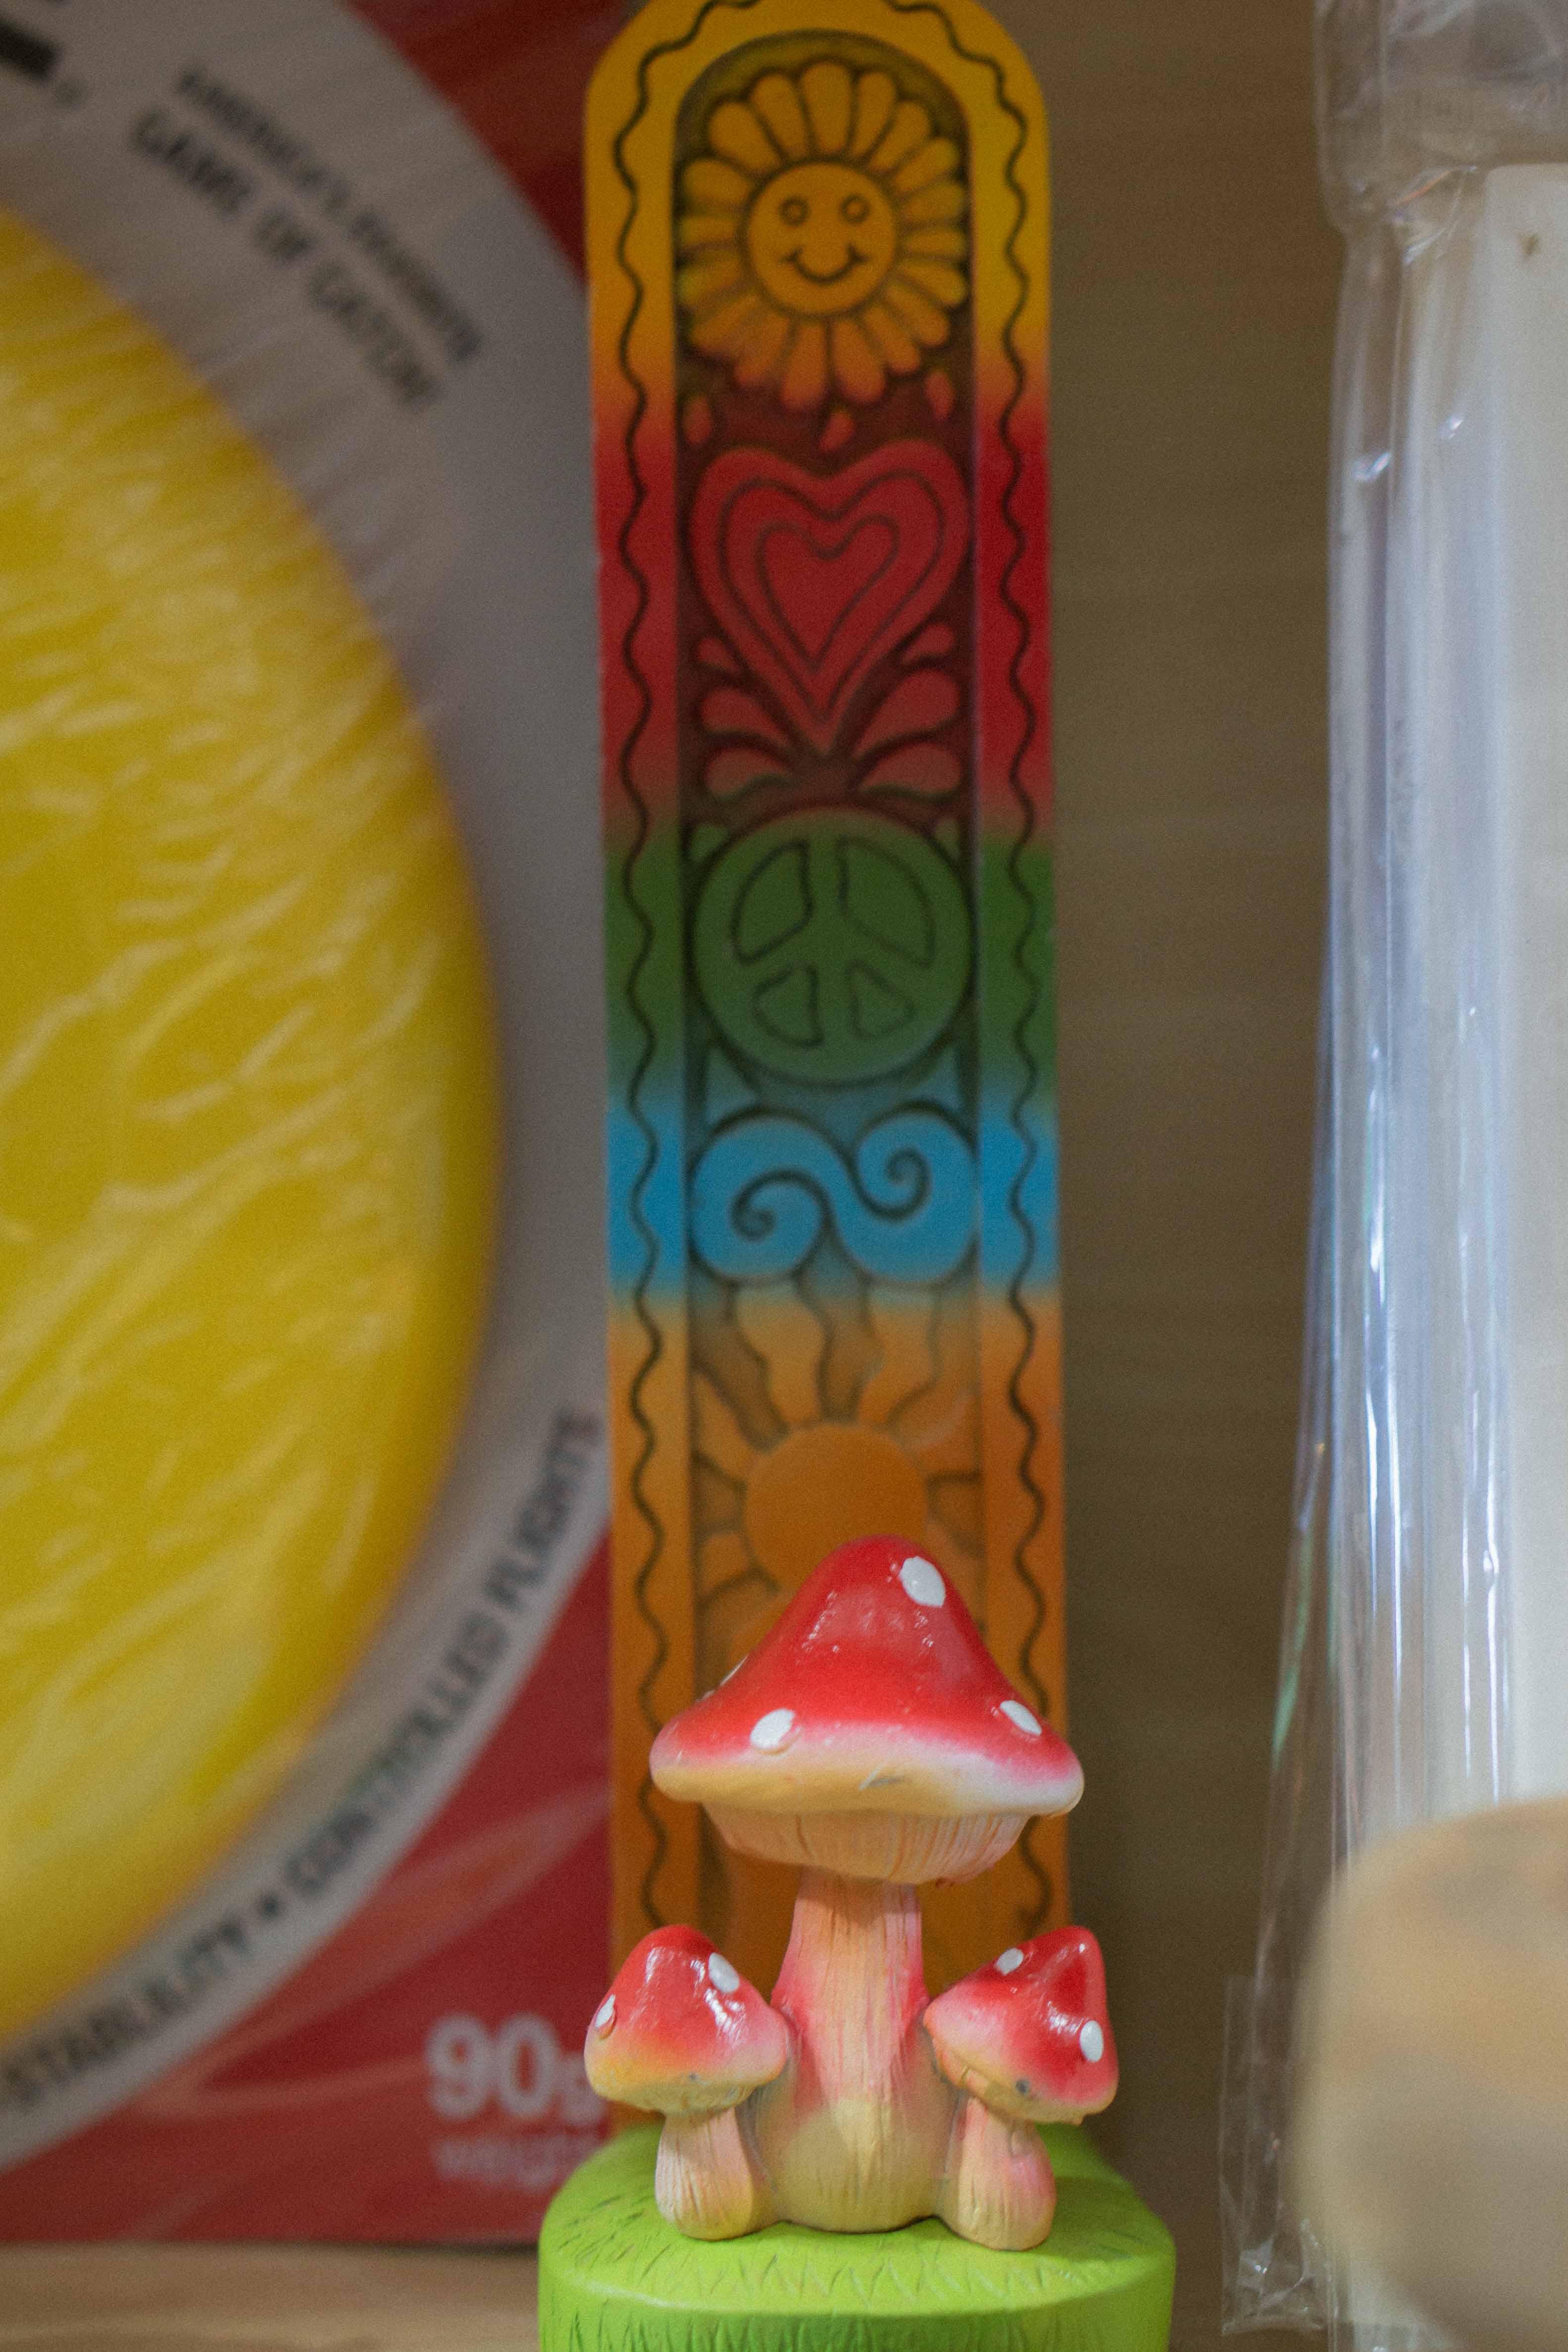 Standing Mushroom Incense Burner with Chakra Colors - Random Hippie